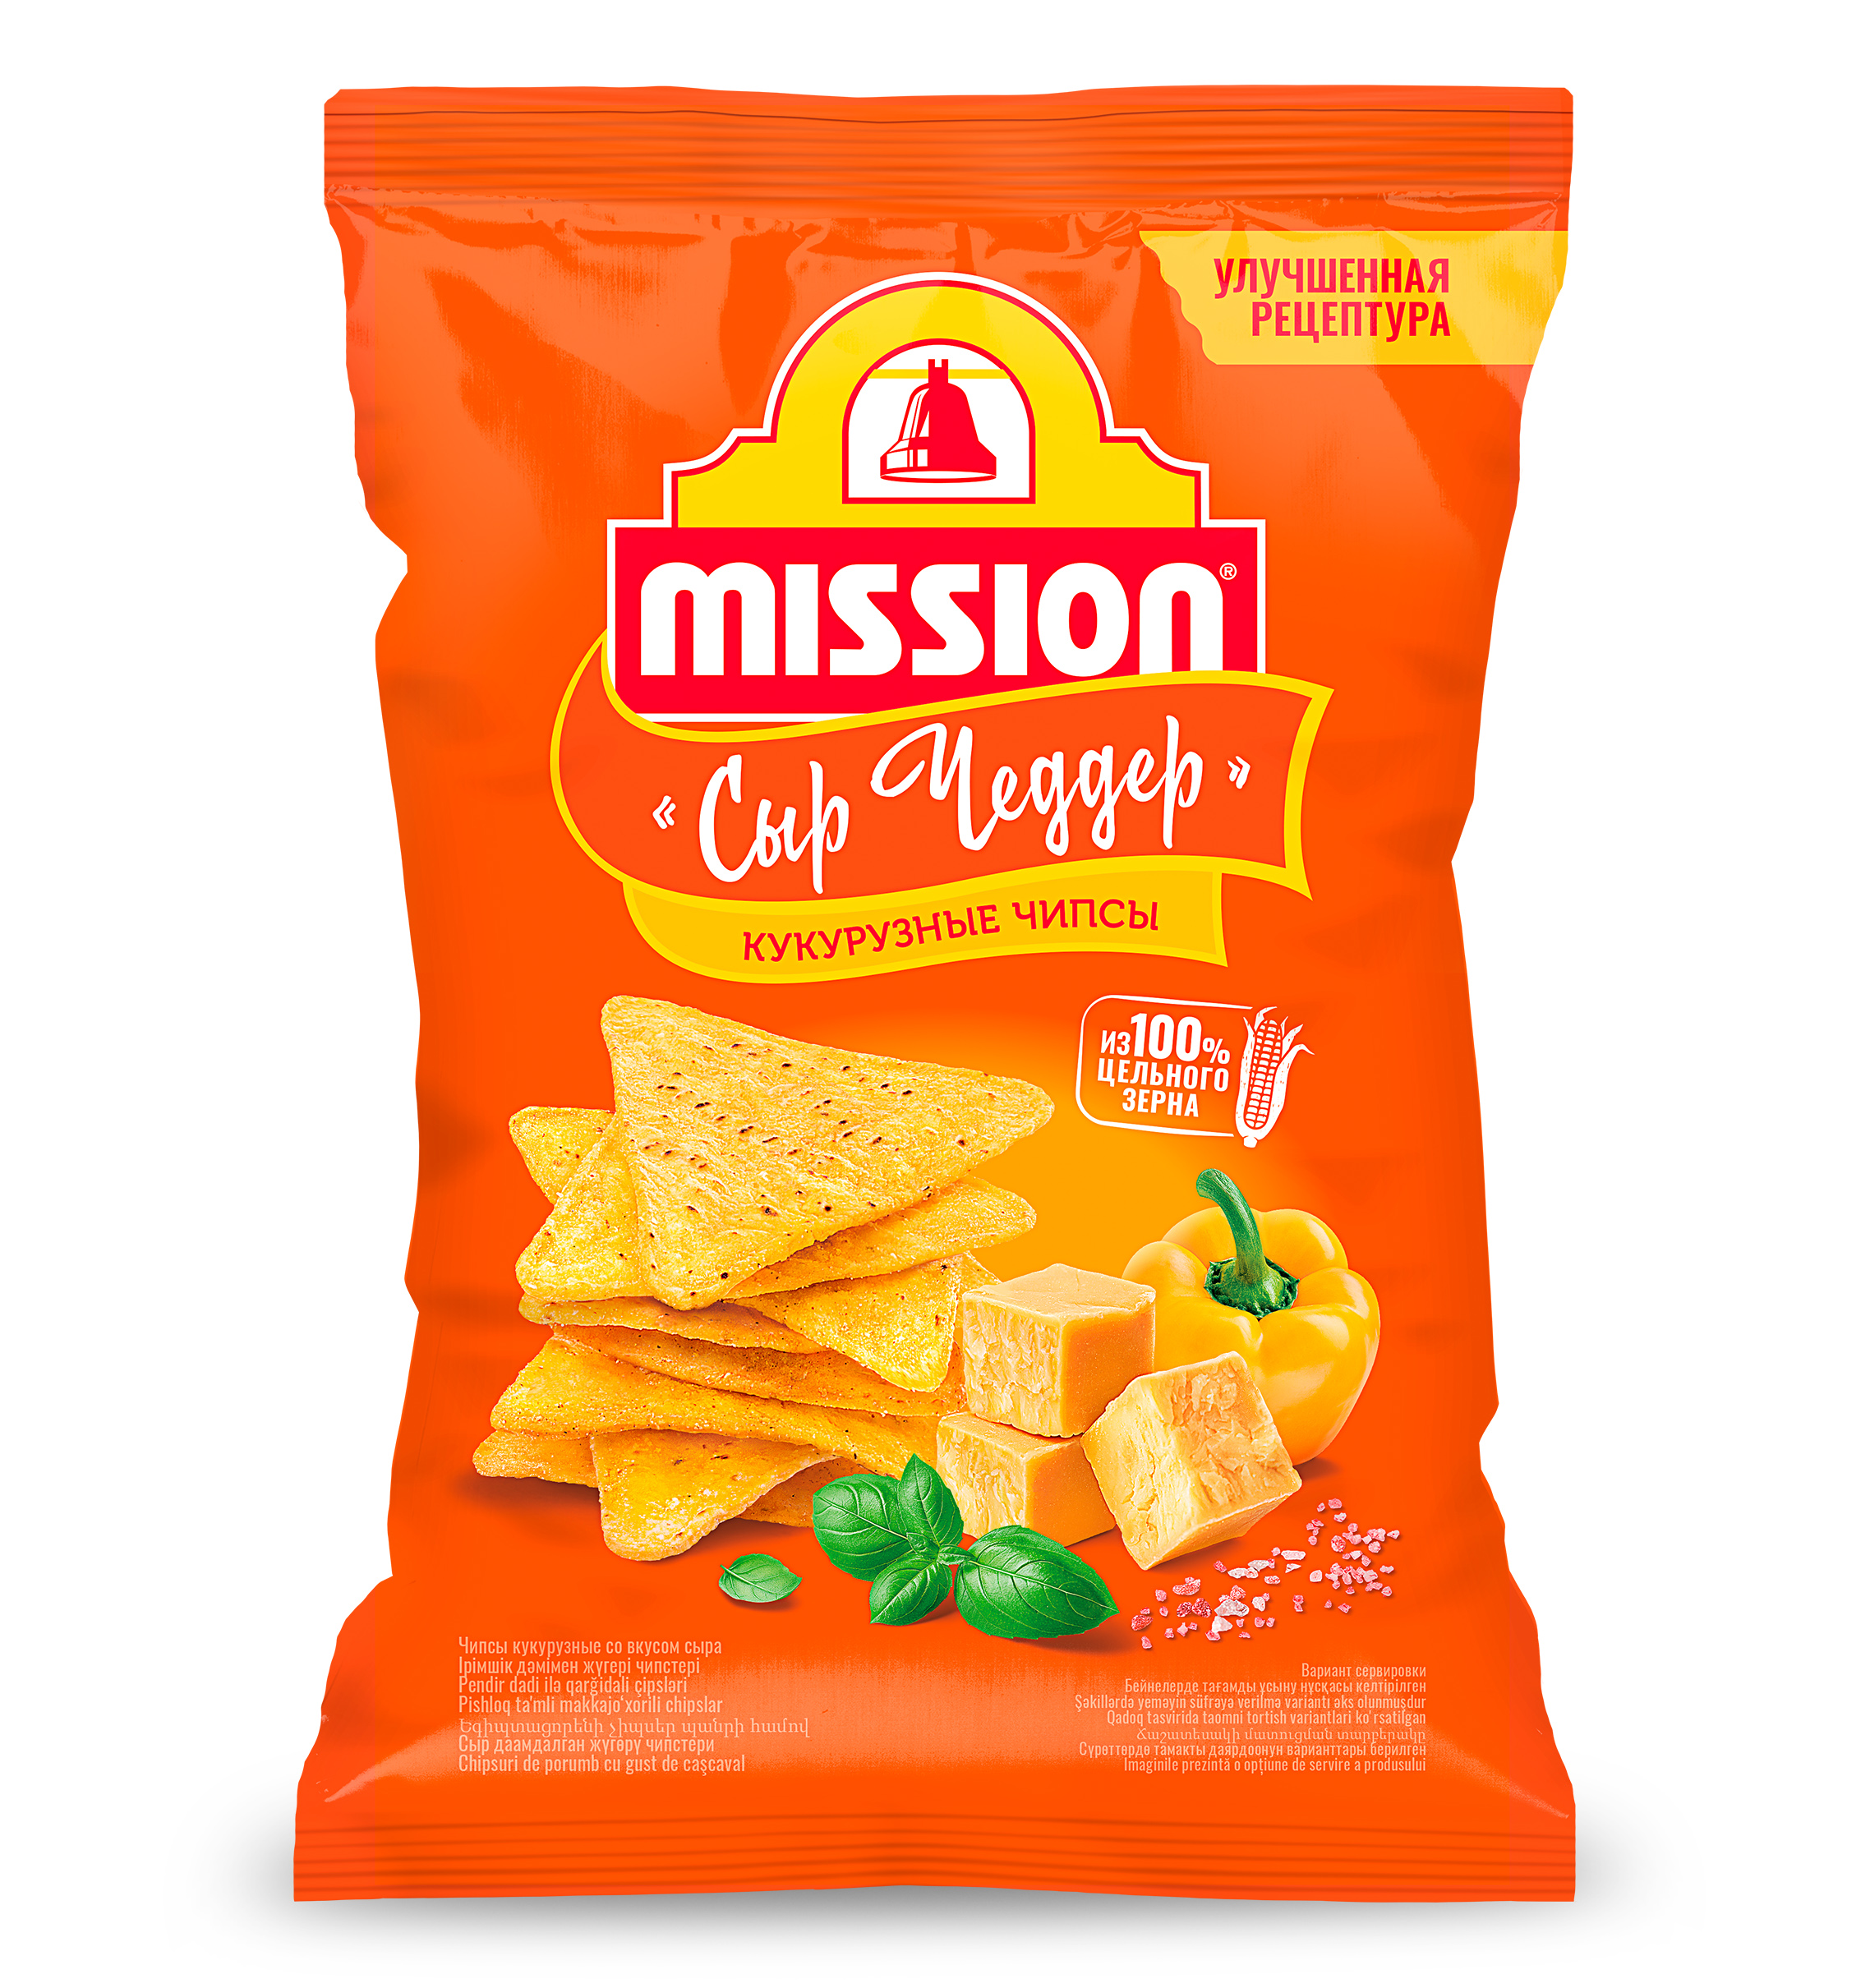 Чипсы кукурузные Mission со вкусом сыр Чеддер 150г